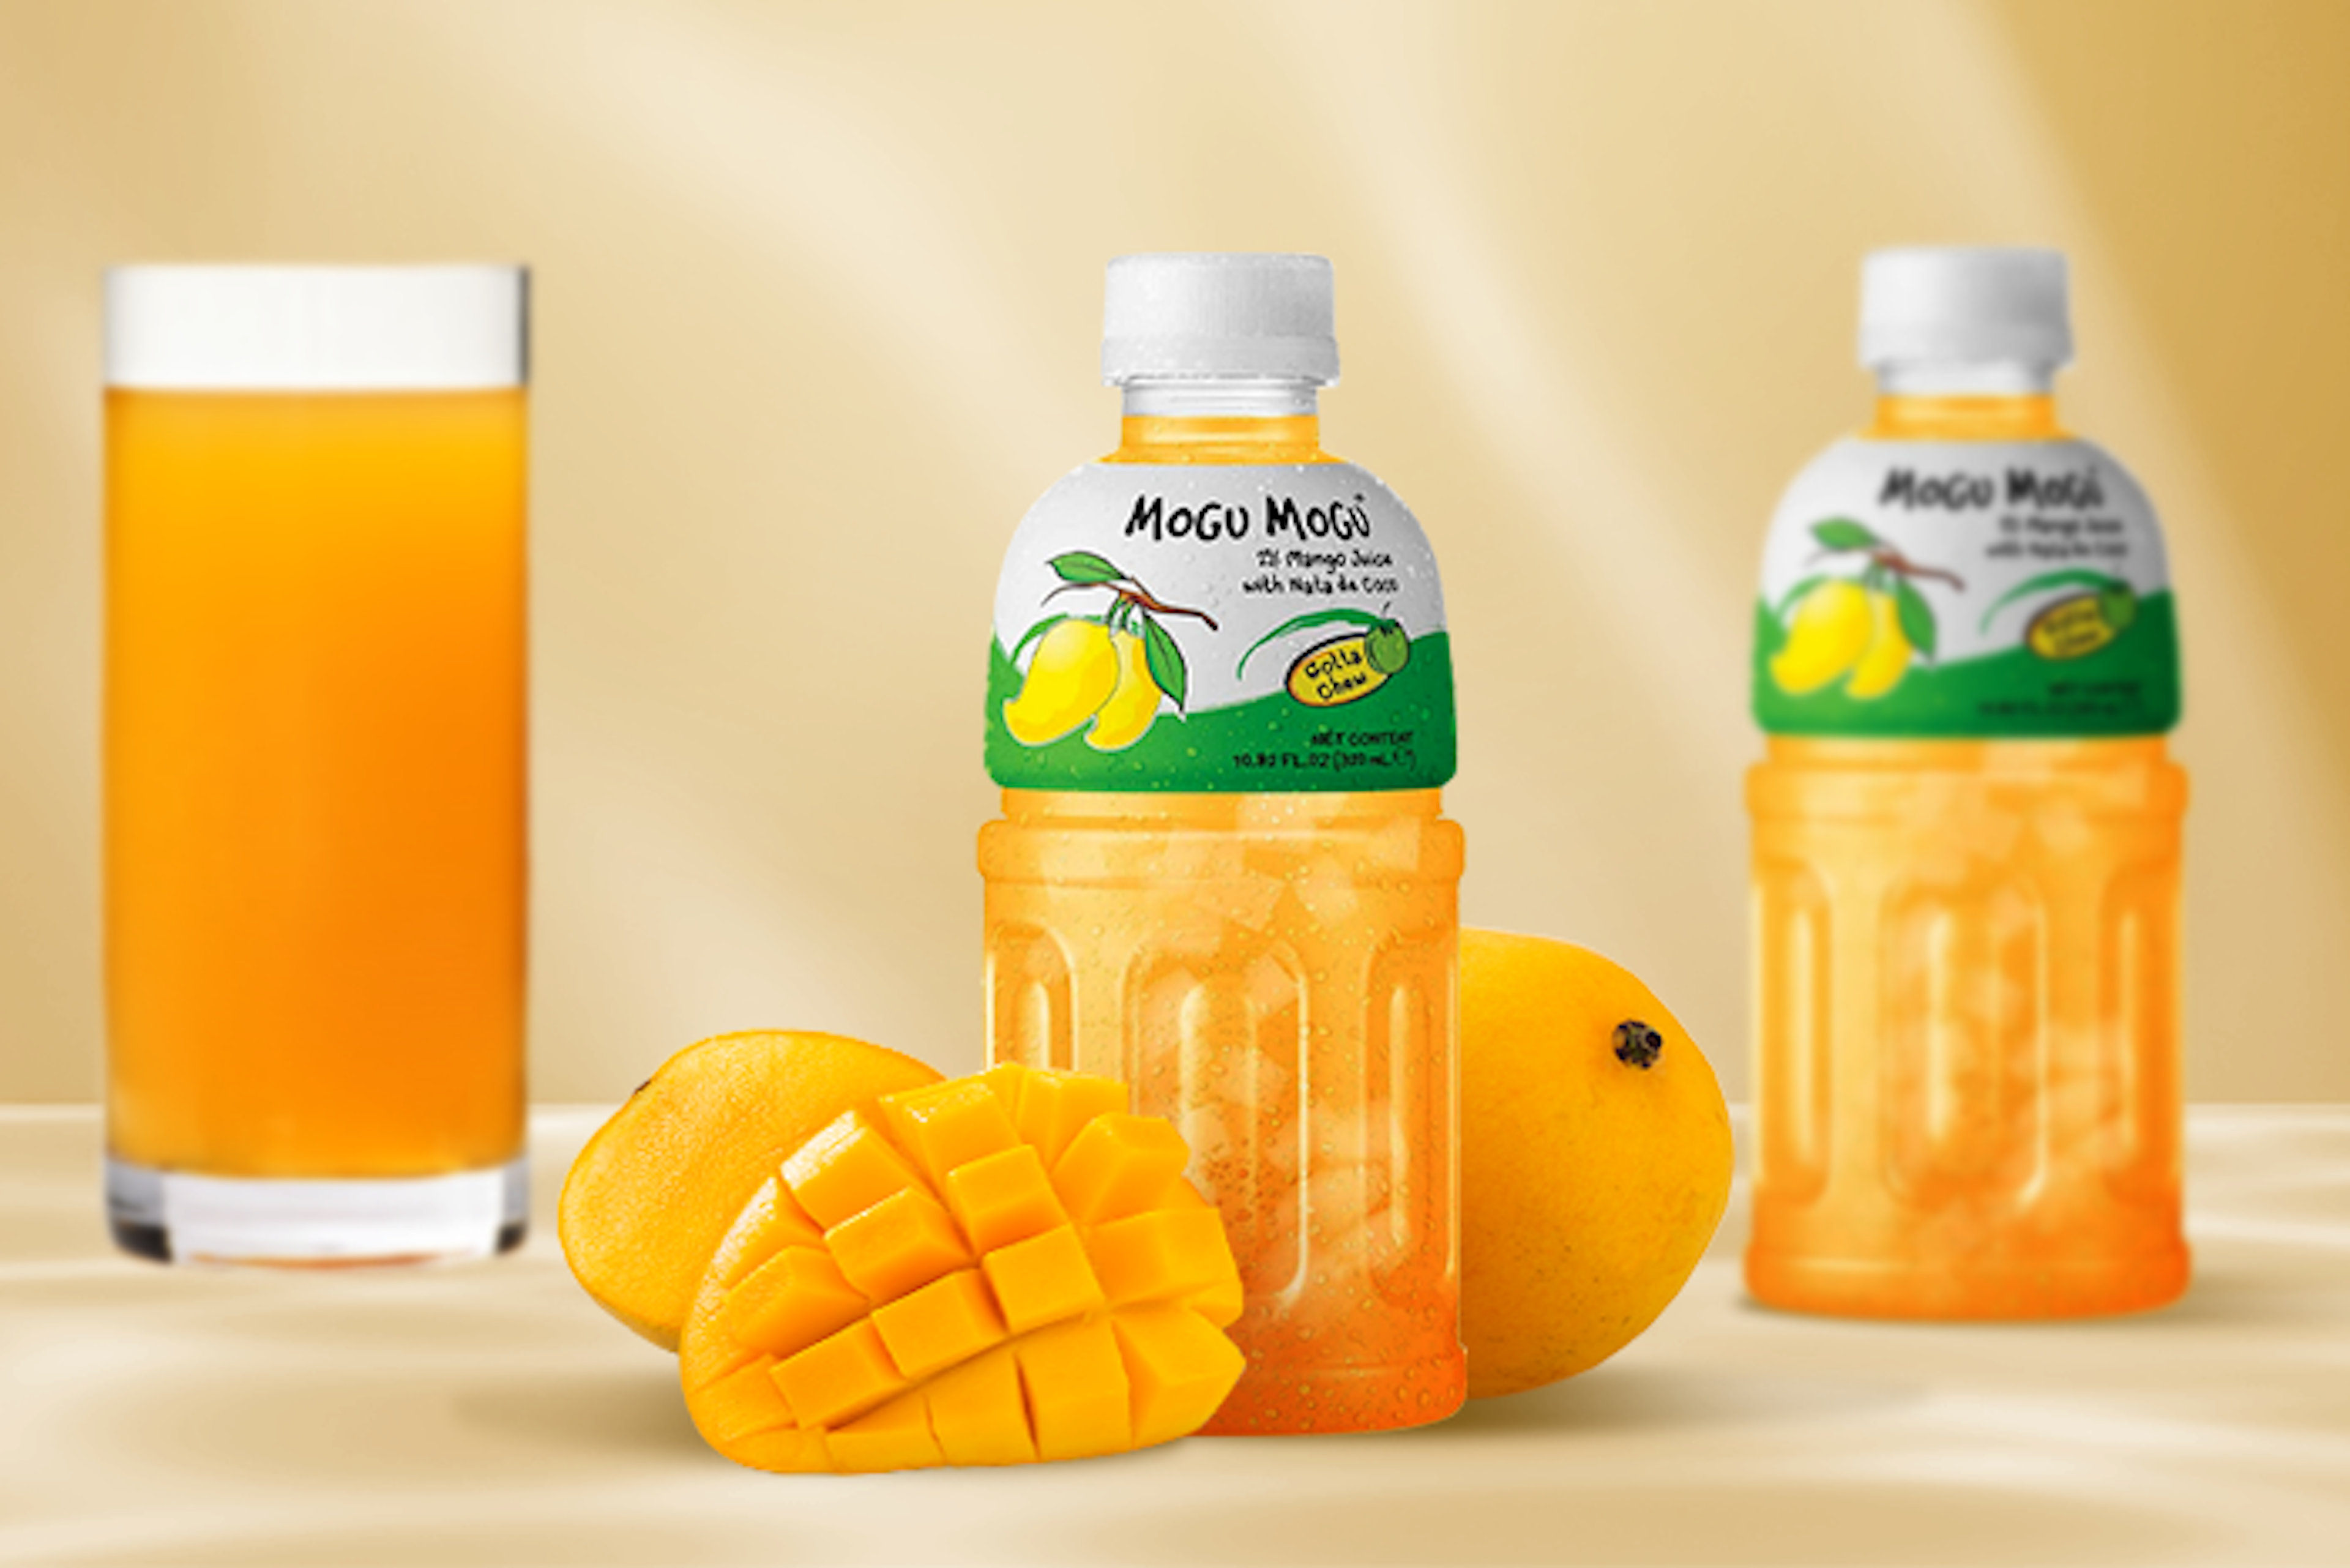 Mogu Mogu Mango Drink with Nata de Coco 320ml - Tropical and Refreshing